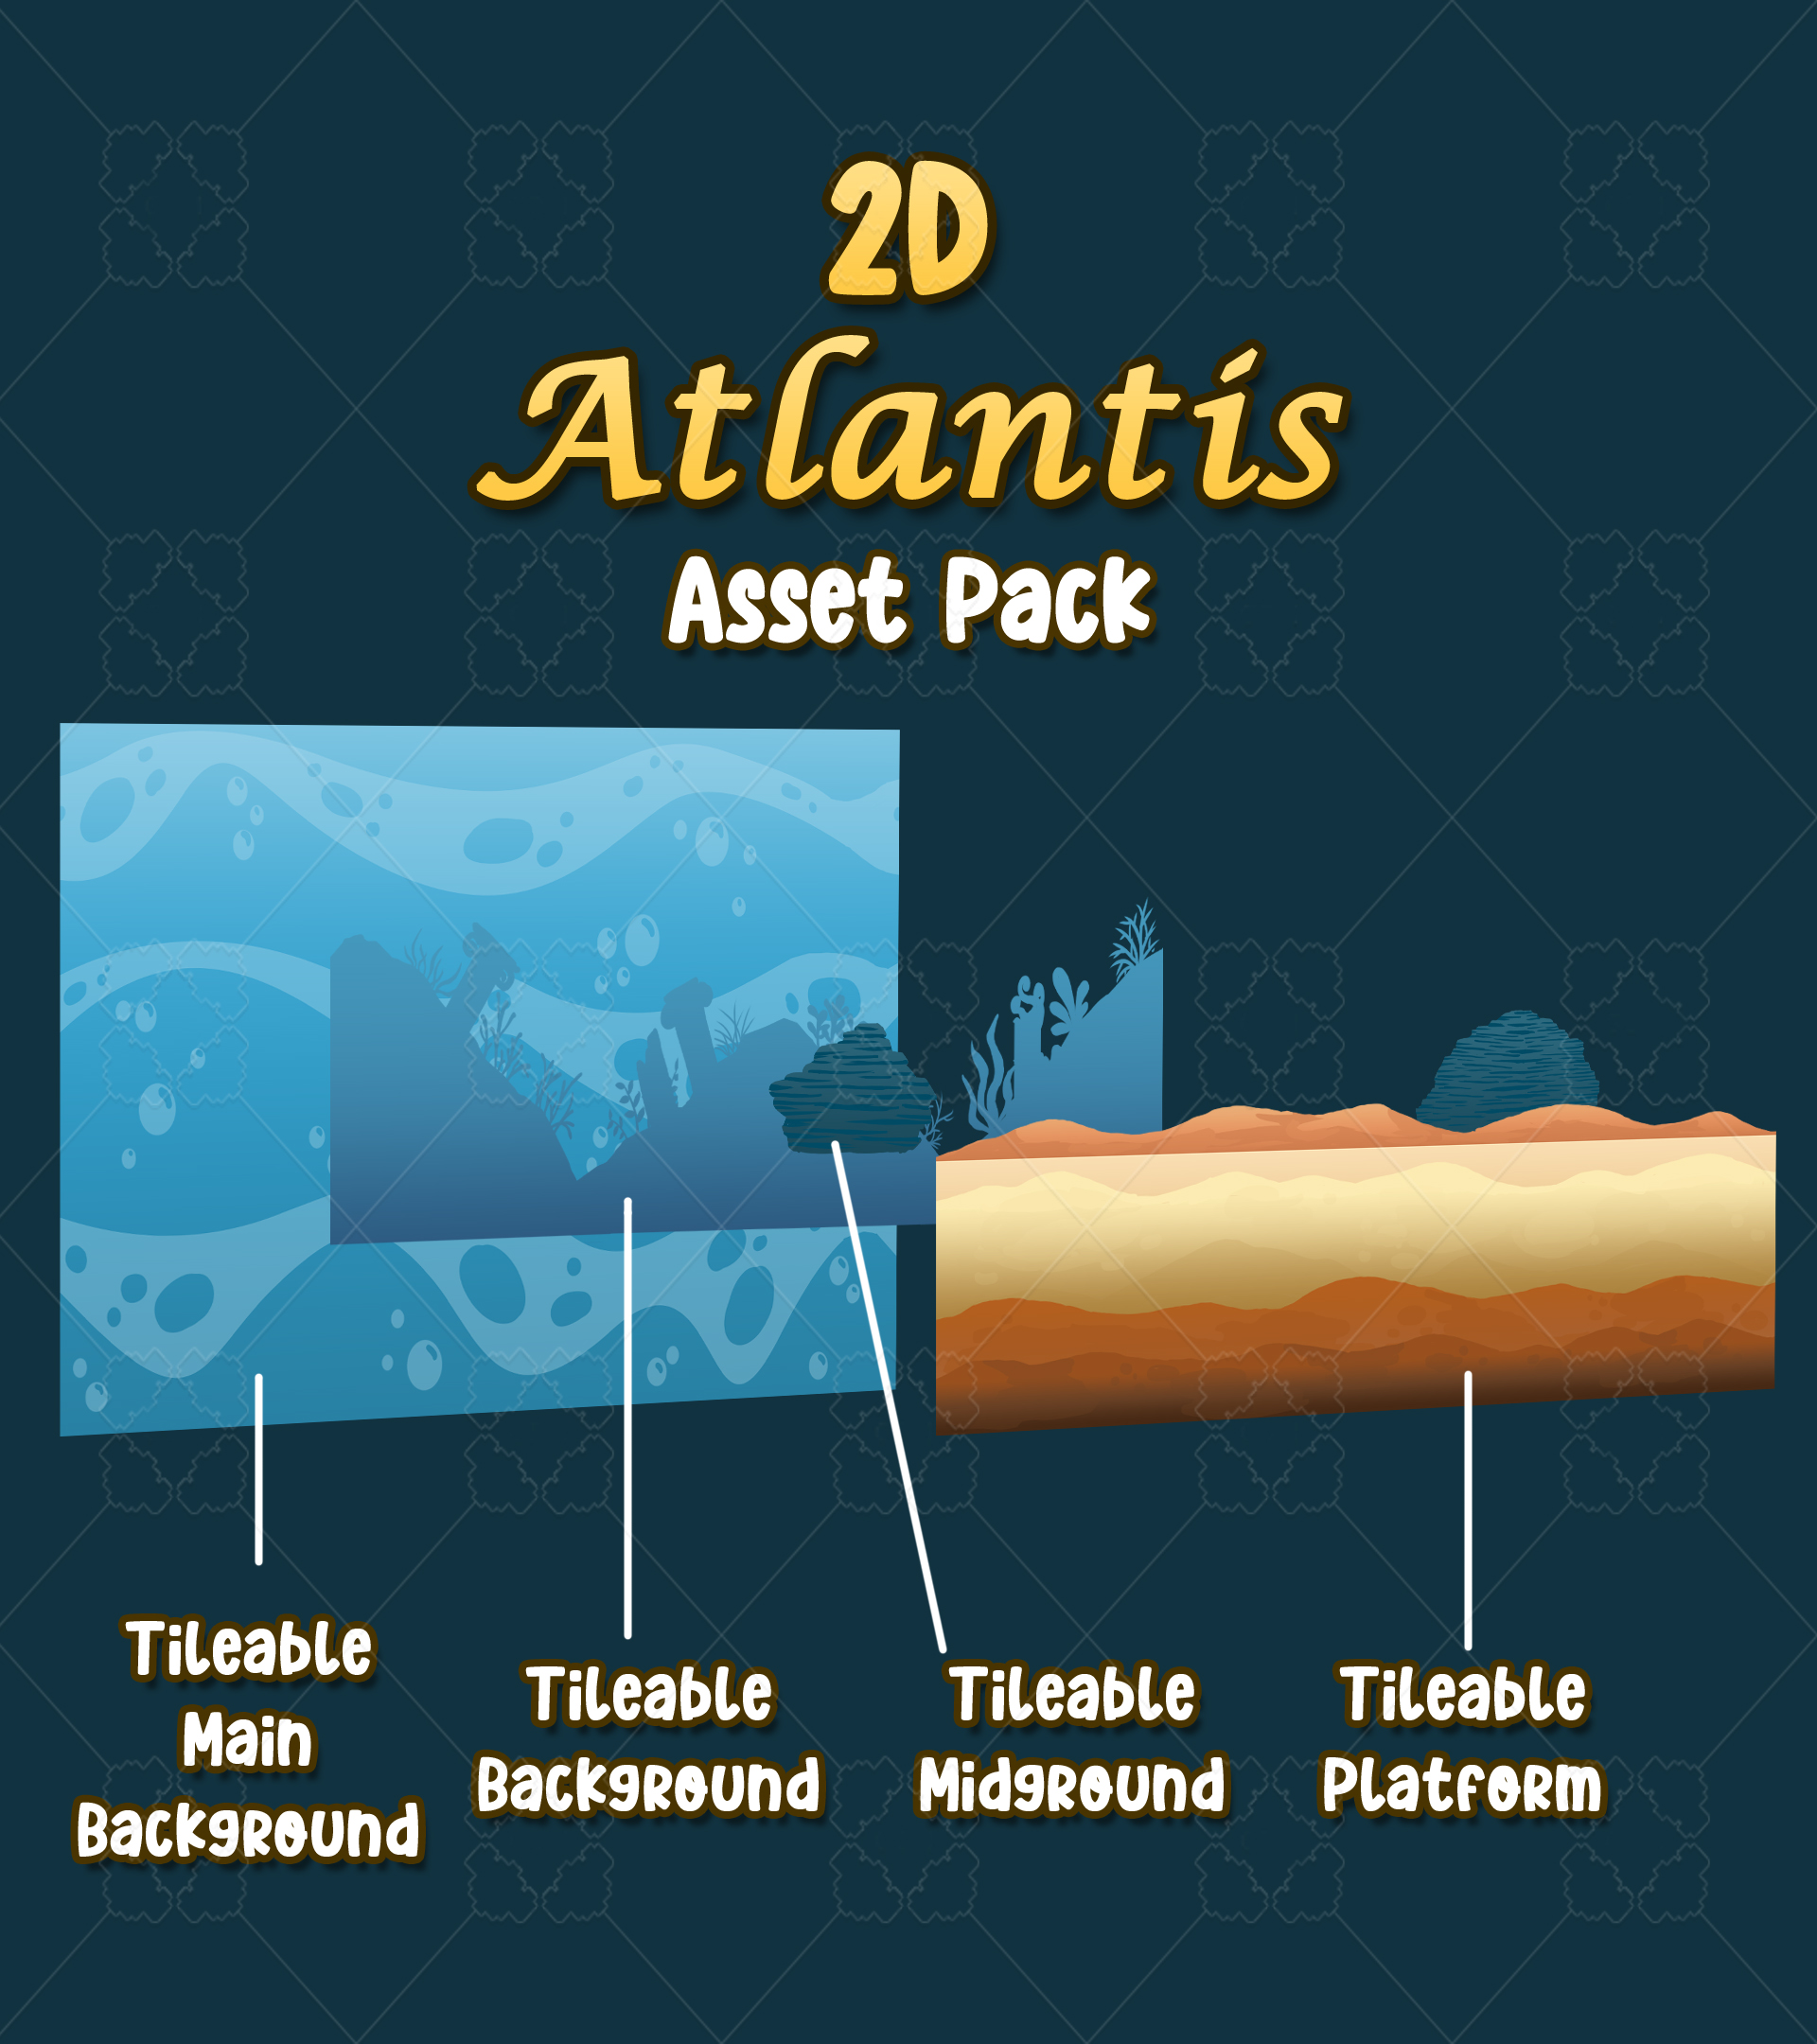 2D Atlantis Asset Pack - Background Layers